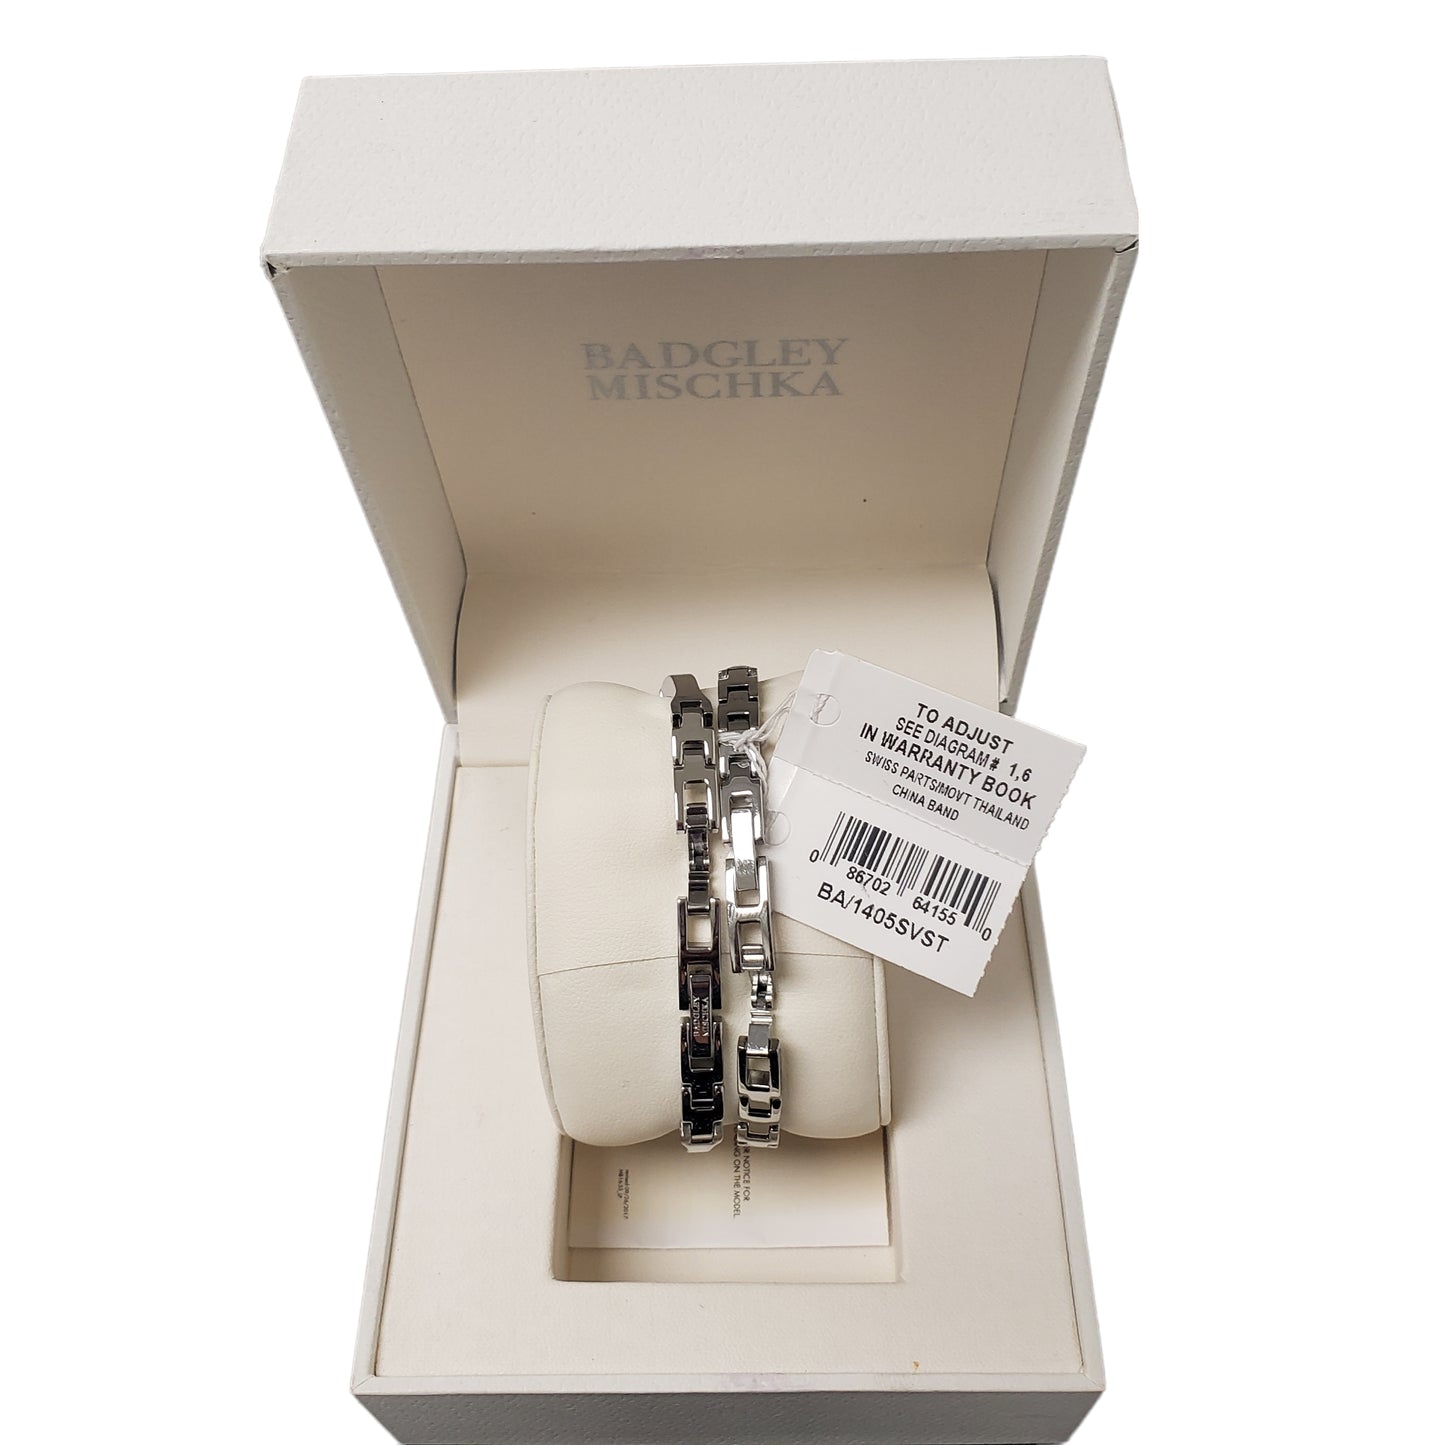 Badgley Mischka Ba/1405svst Women's 20mm Crystal Accent Watch Bracelet Set NWT - UproMax